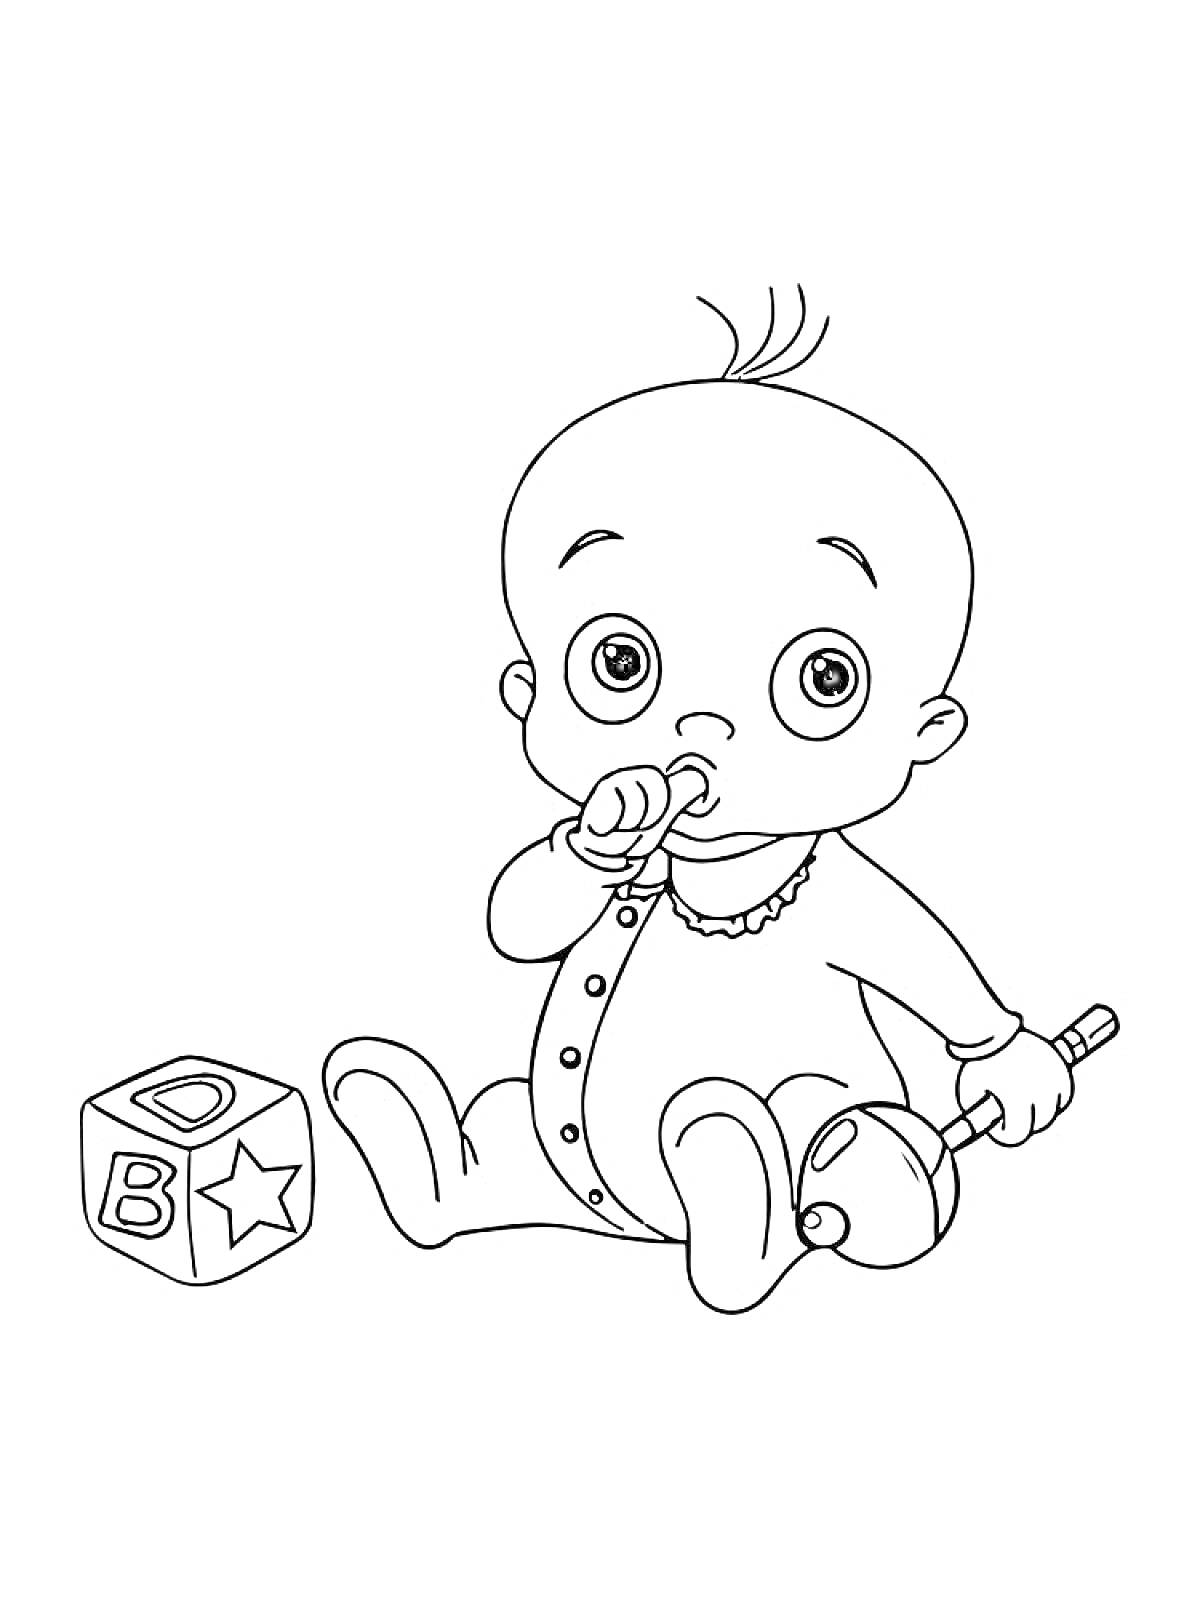 На раскраске изображено: Младенец, Ребёнок, Погремушка, Игрушки, Детские игрушки, Кубики